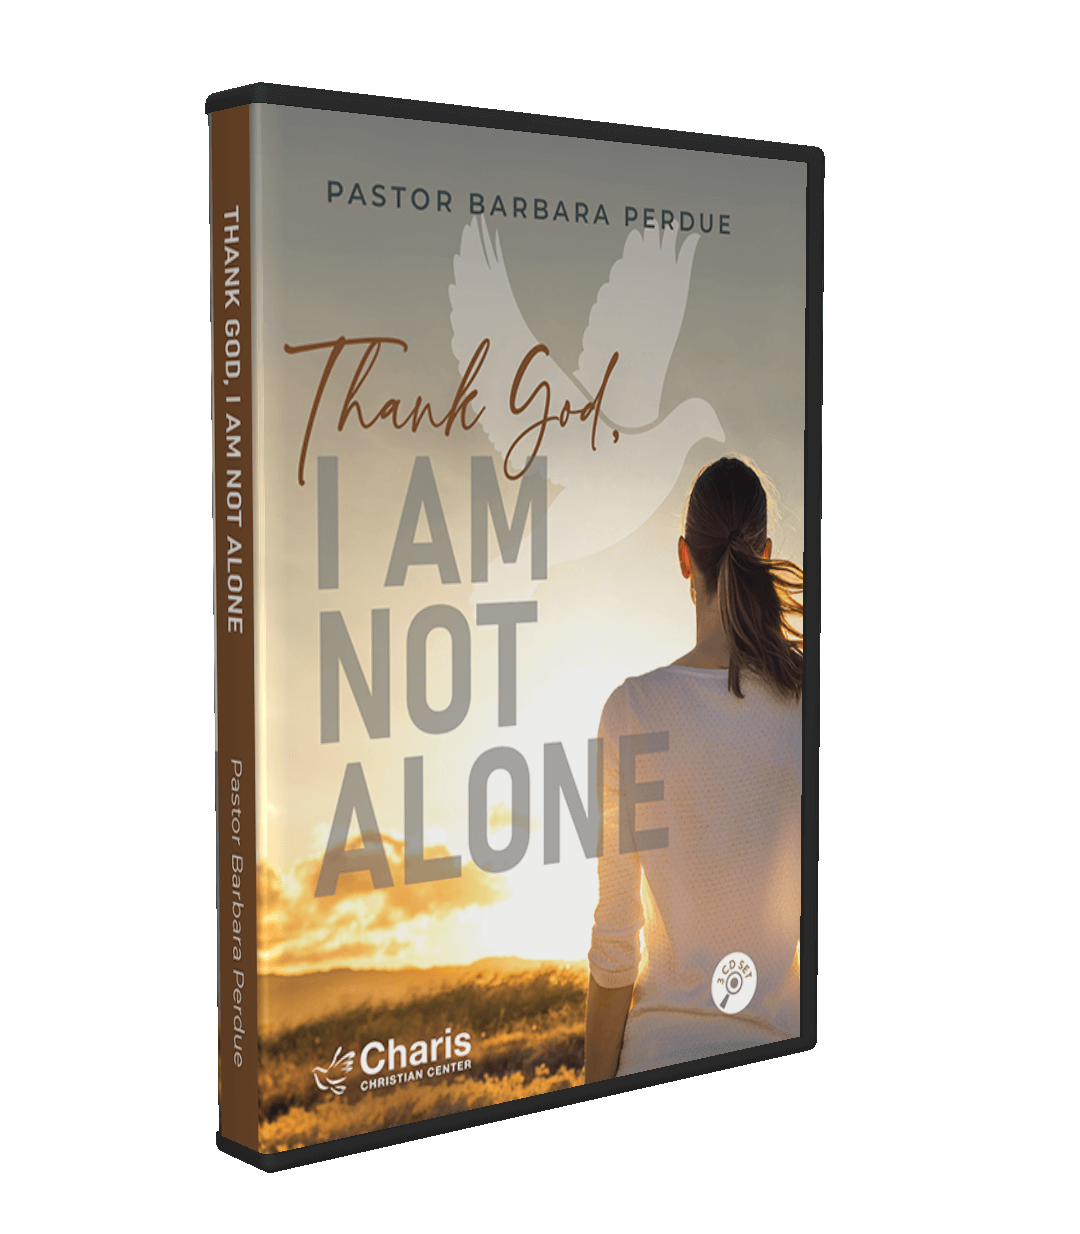 Thank God, I am not alone! – 3 CD Set